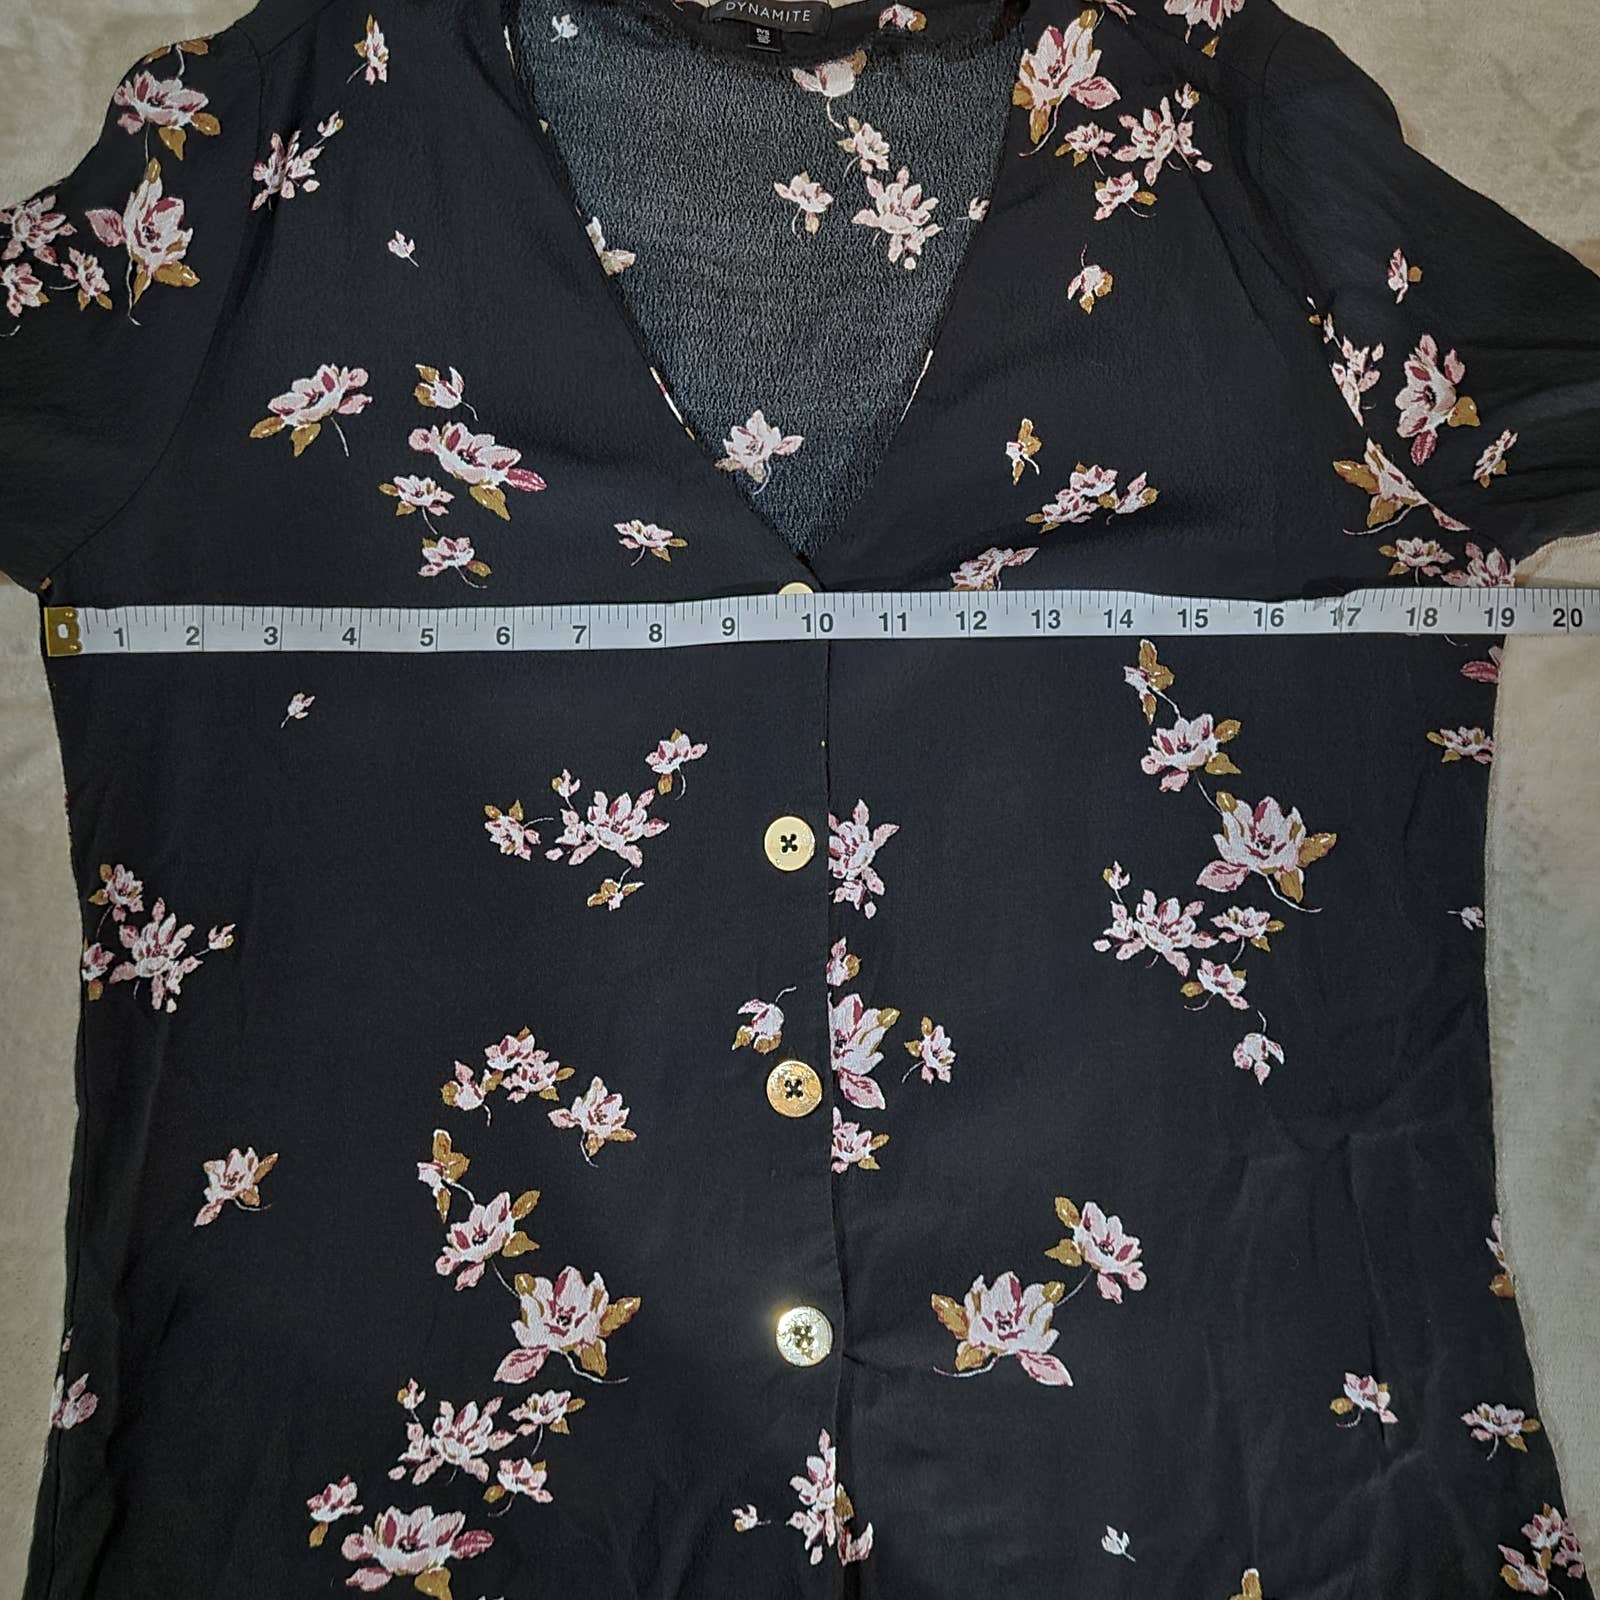 Dynamite Black Floral Button Up Blouse - Size SmallMarkita's ClosetDynamite